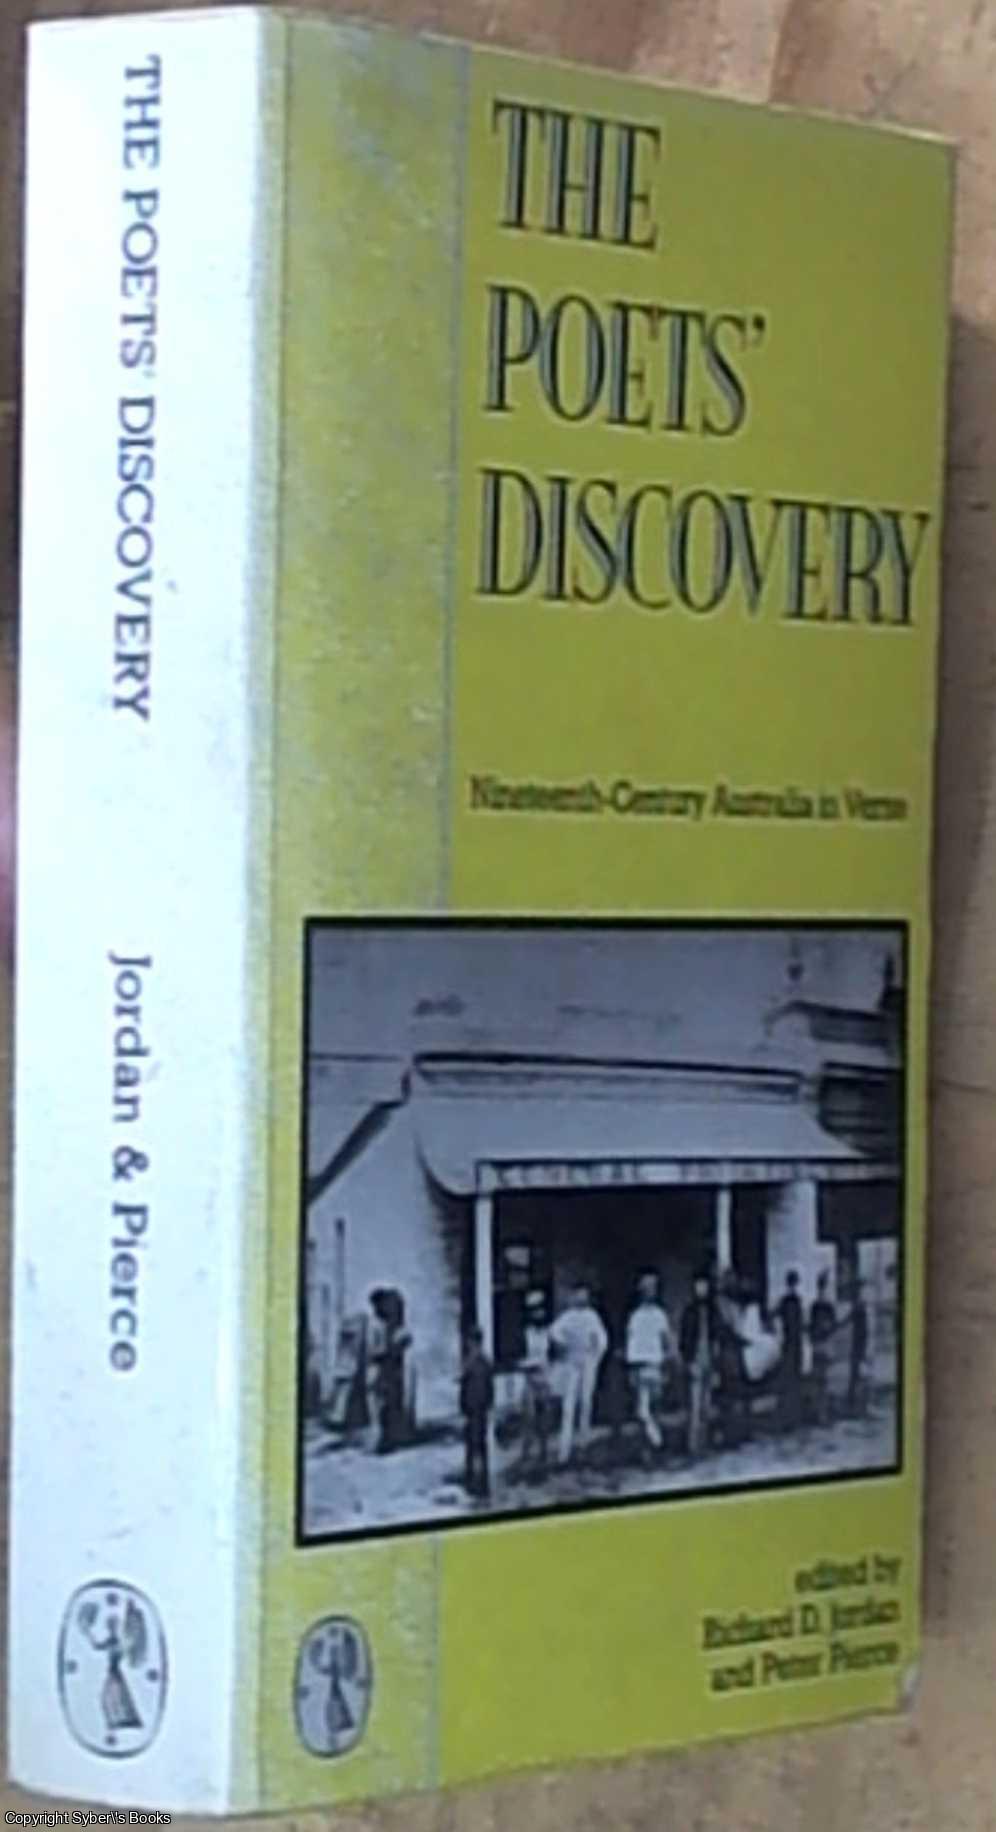 Jordan, Richard and Pierce, Peter  Editors - The Poets' Discovery: Nineteenth-Century Australia in Verse